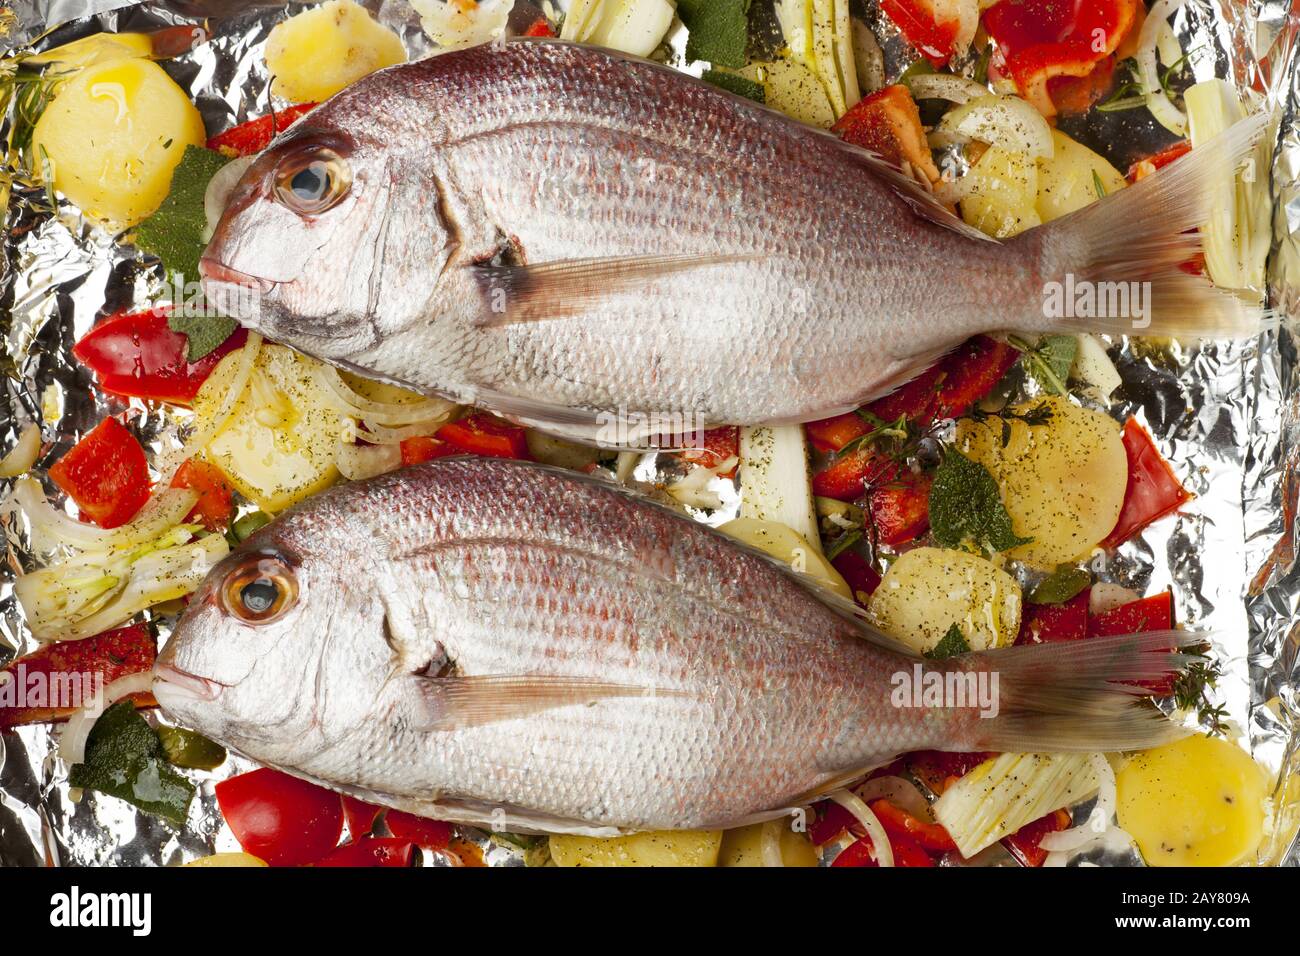 Bam de mer cru avec légumes mélangés Banque D'Images